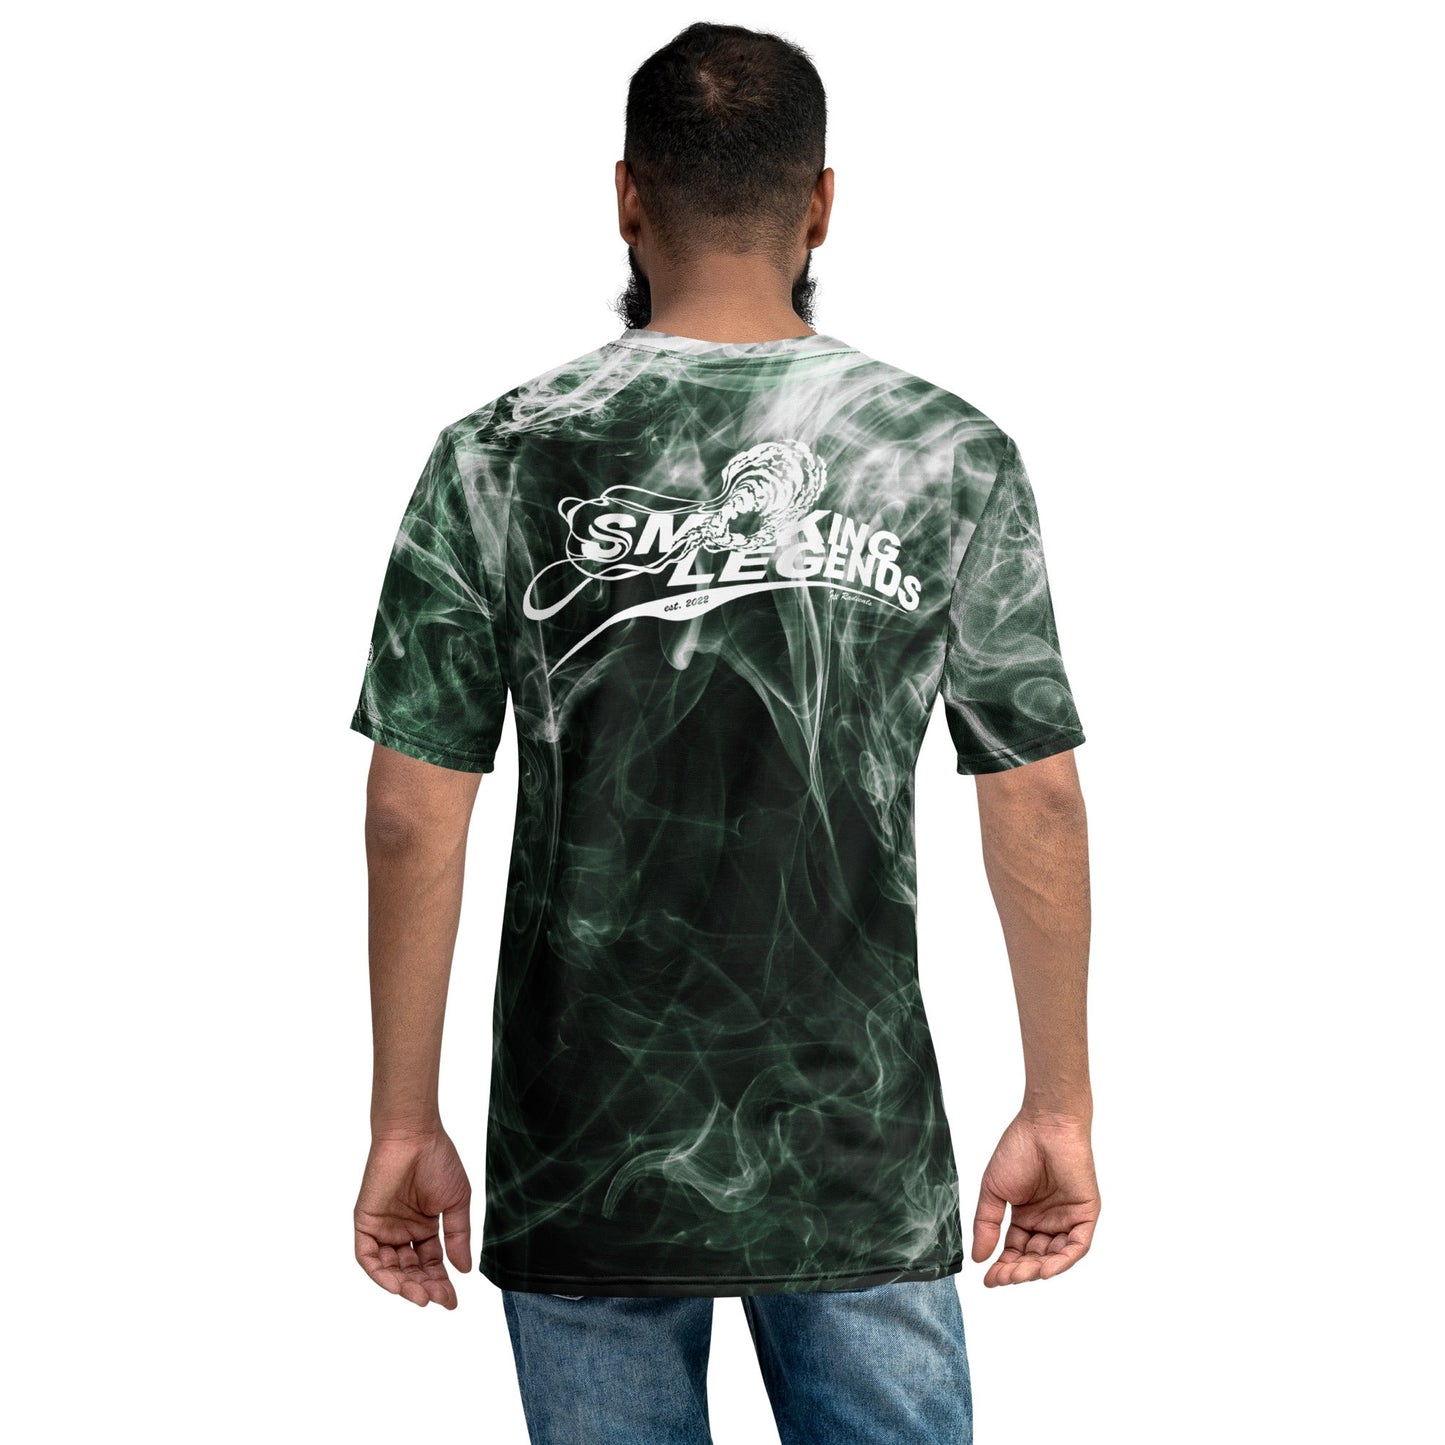 Smoking Legends PAC-1 Men's T-Shirt - City2CityWorld